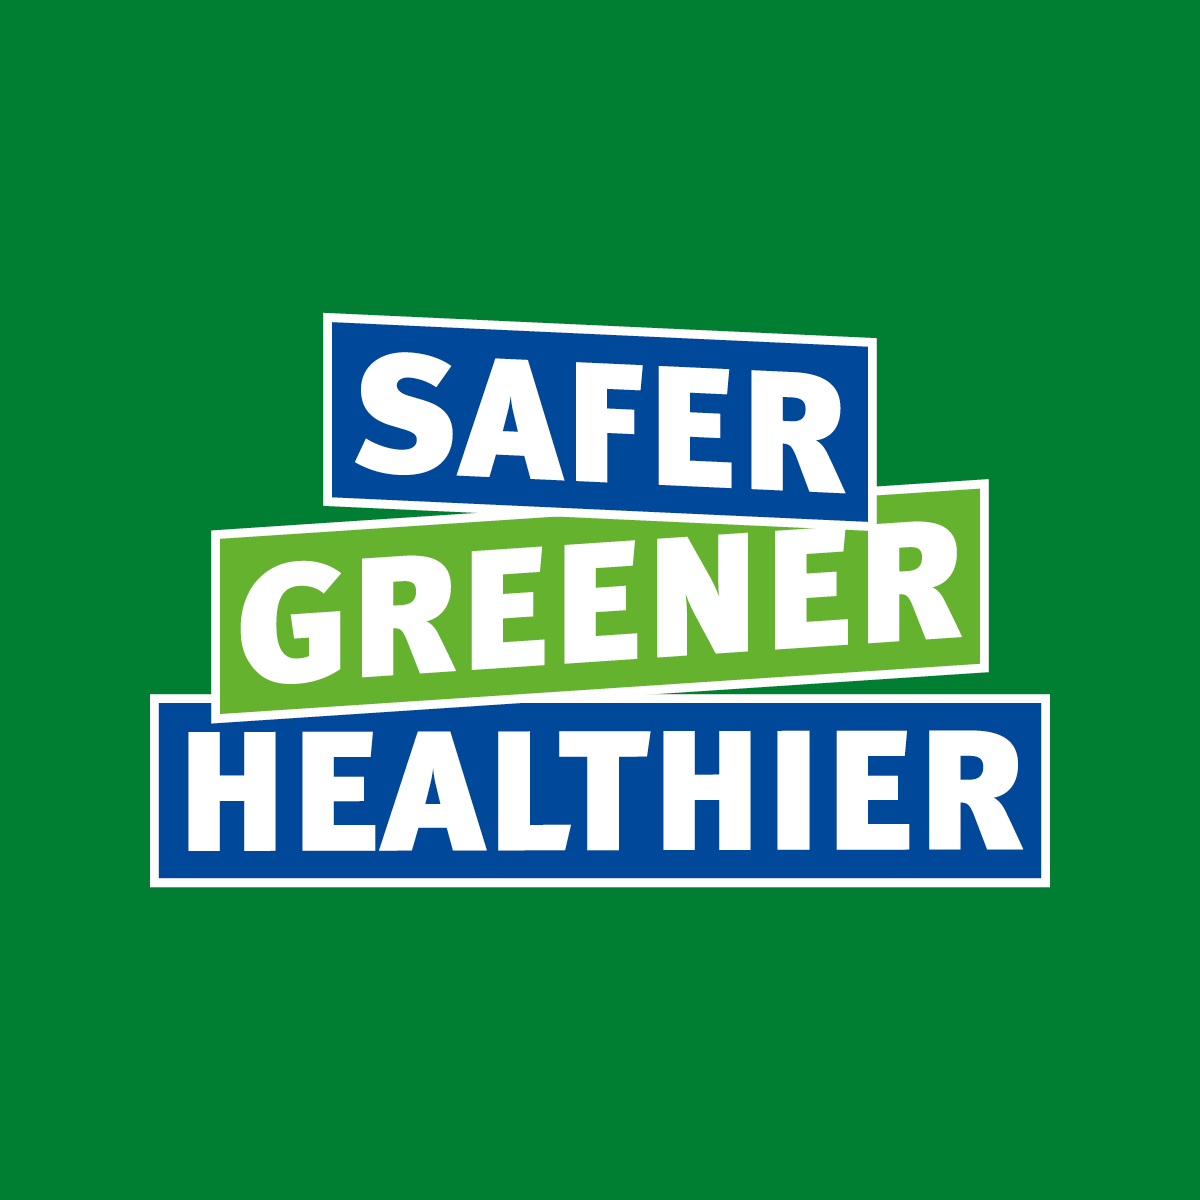 Safer, Greener, Healthier